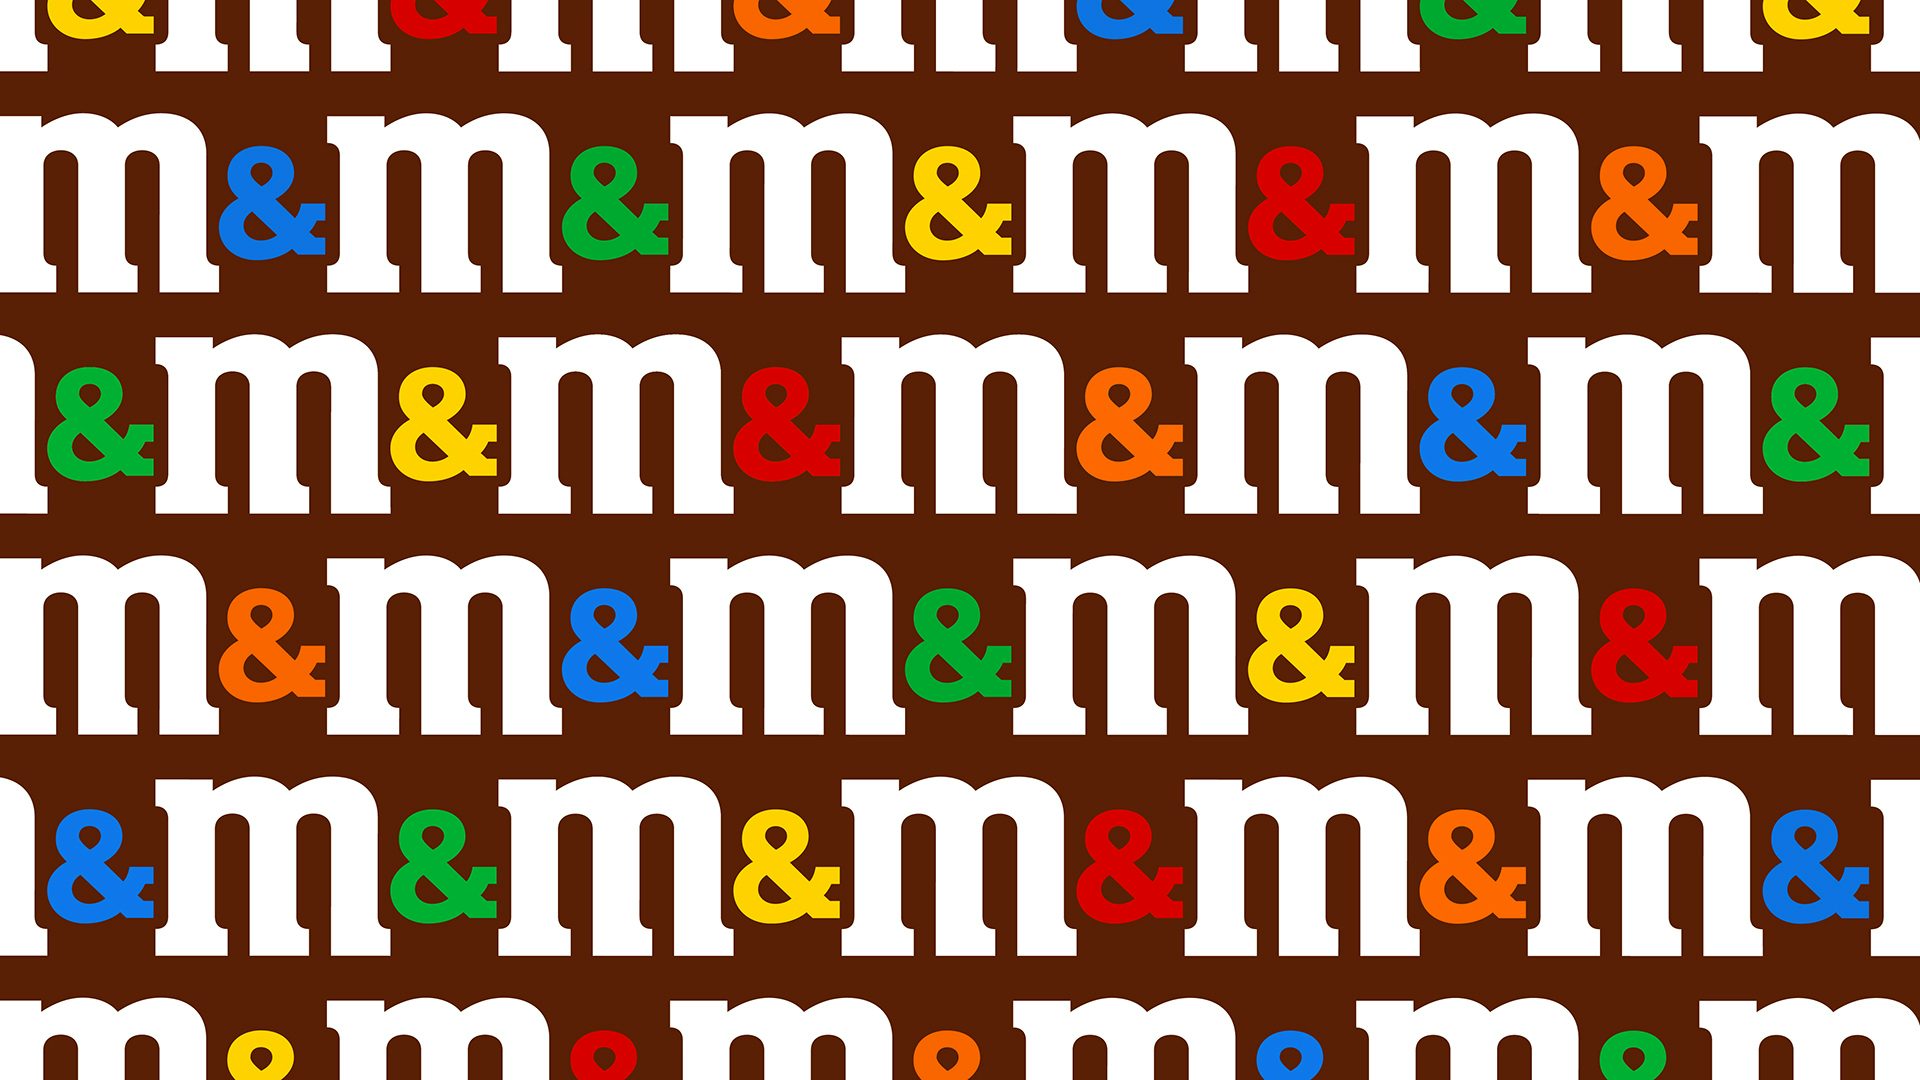 M&M'S® Creating a More Inclusive World